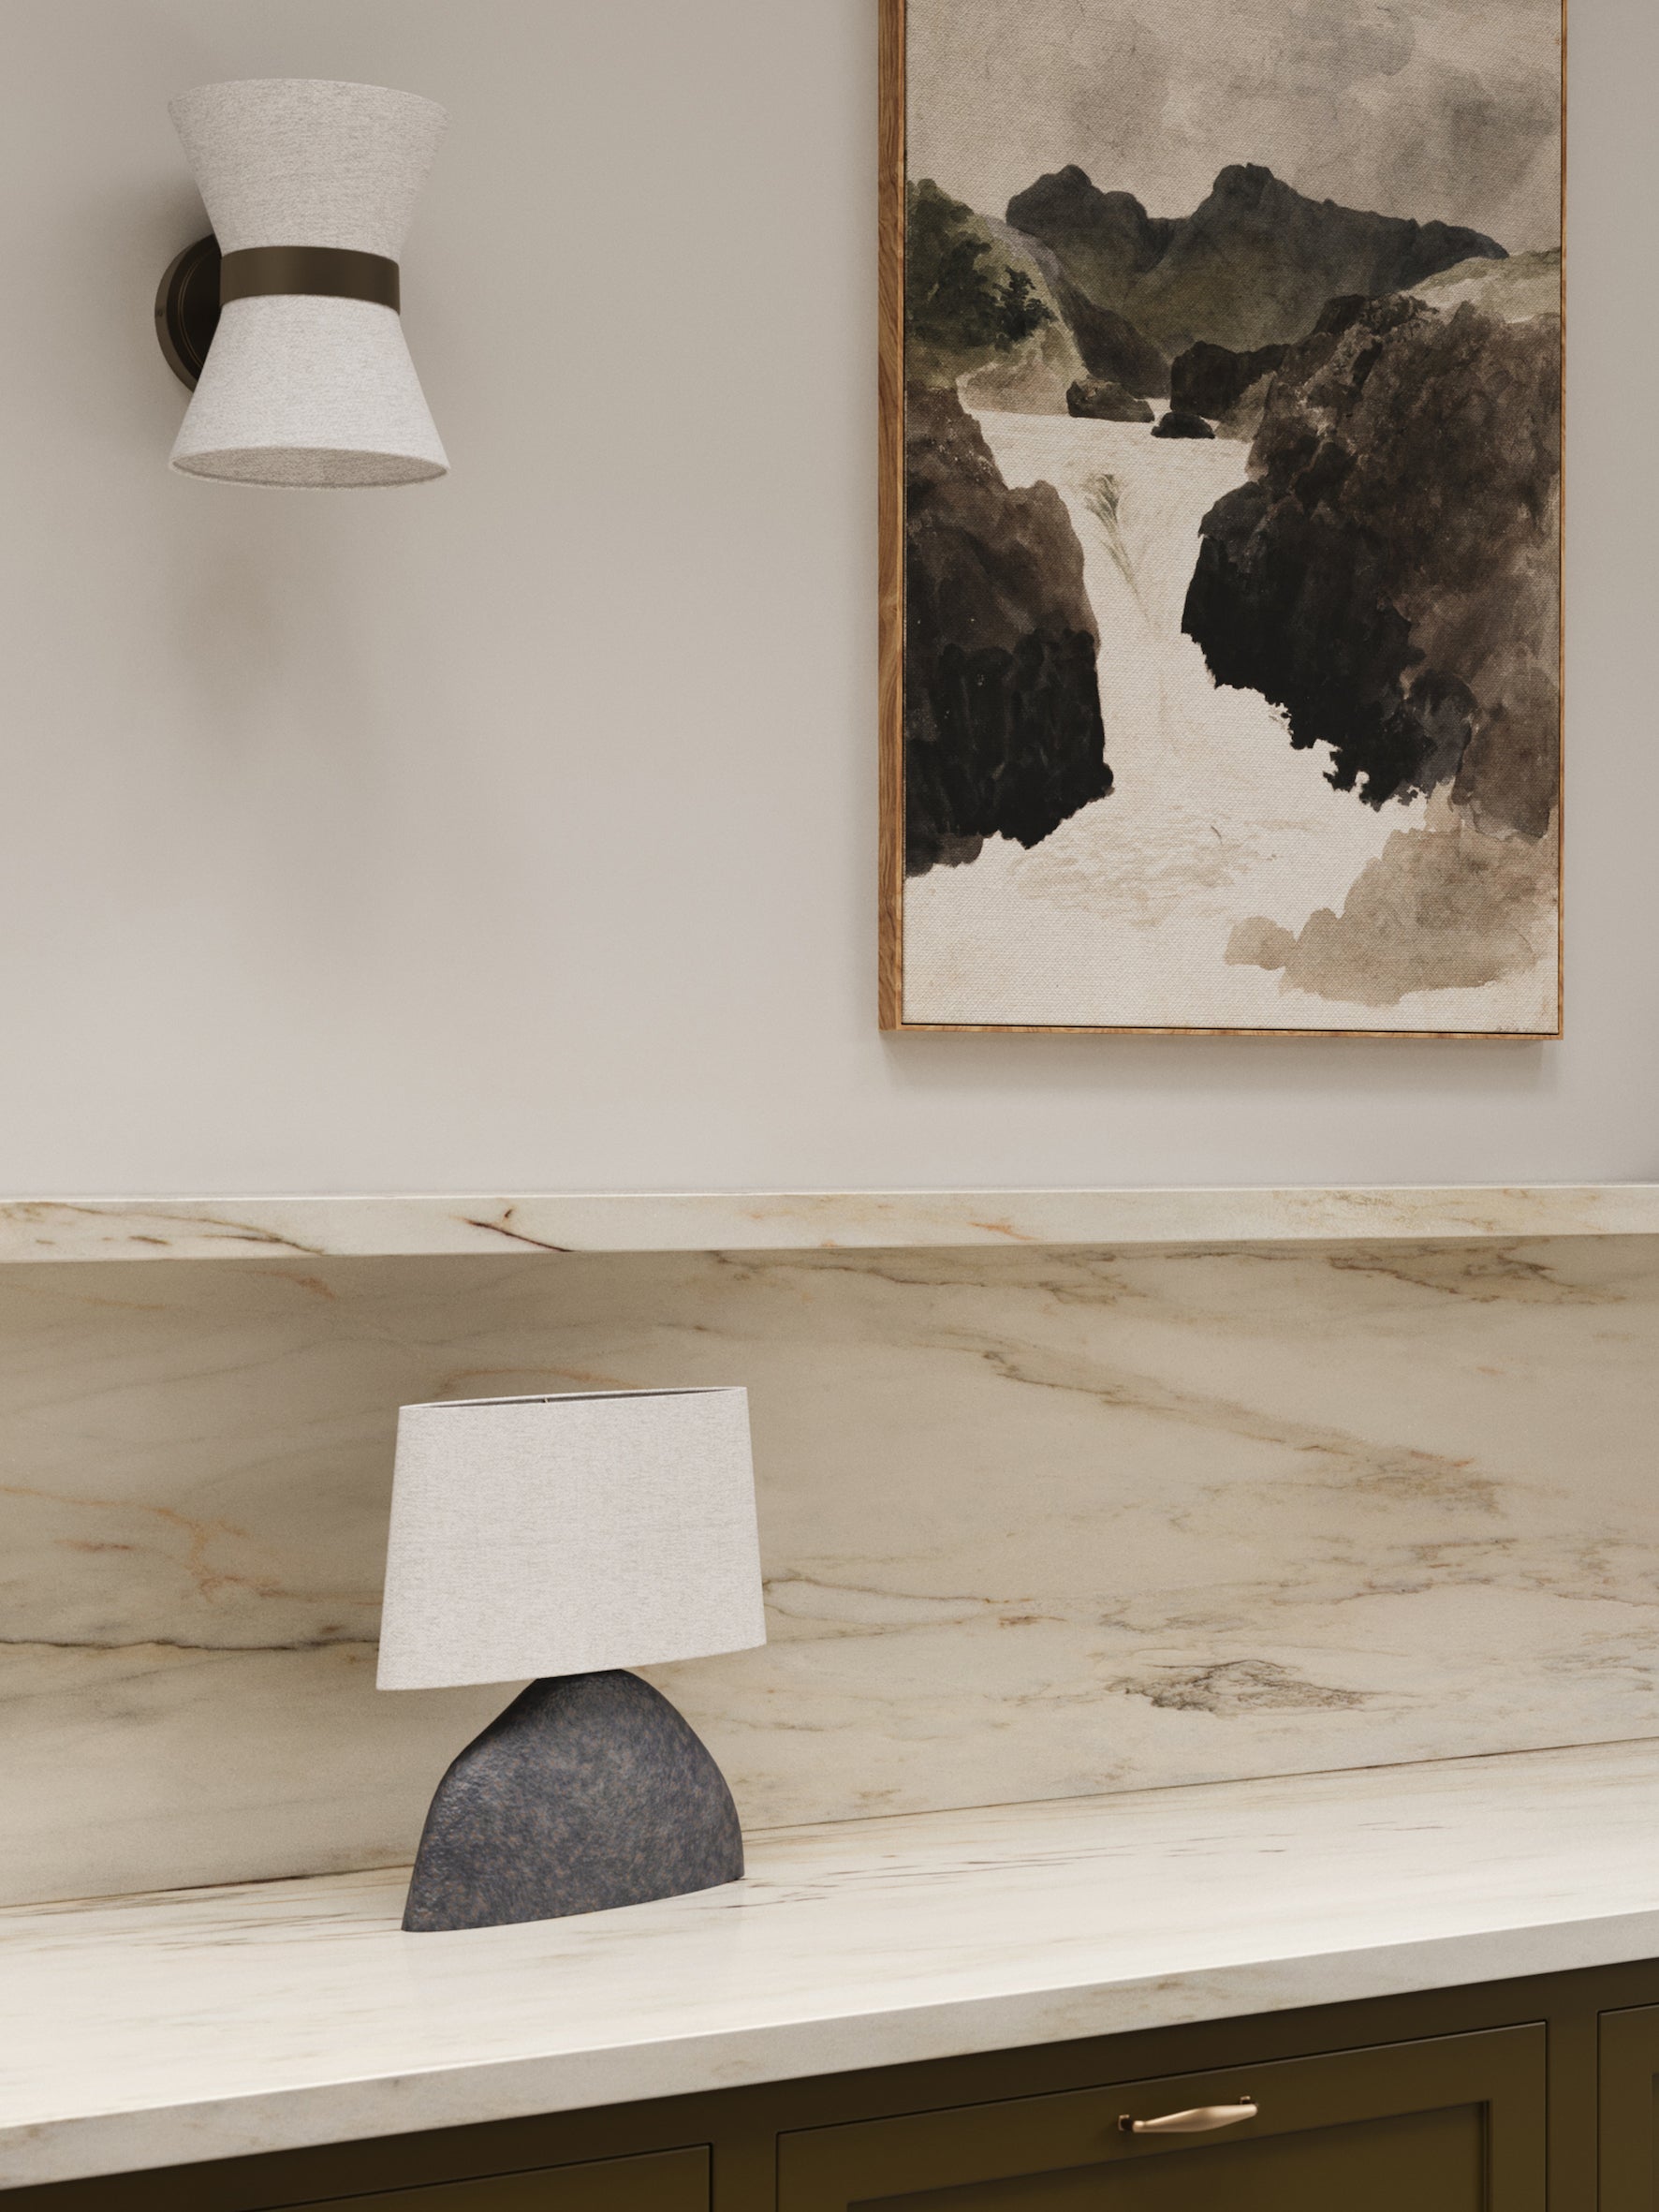 Pitti - bronze ceramic table lamp | Table Lamp | Lights & Lamps Inc | Modern Affordable Designer Lighting | USA